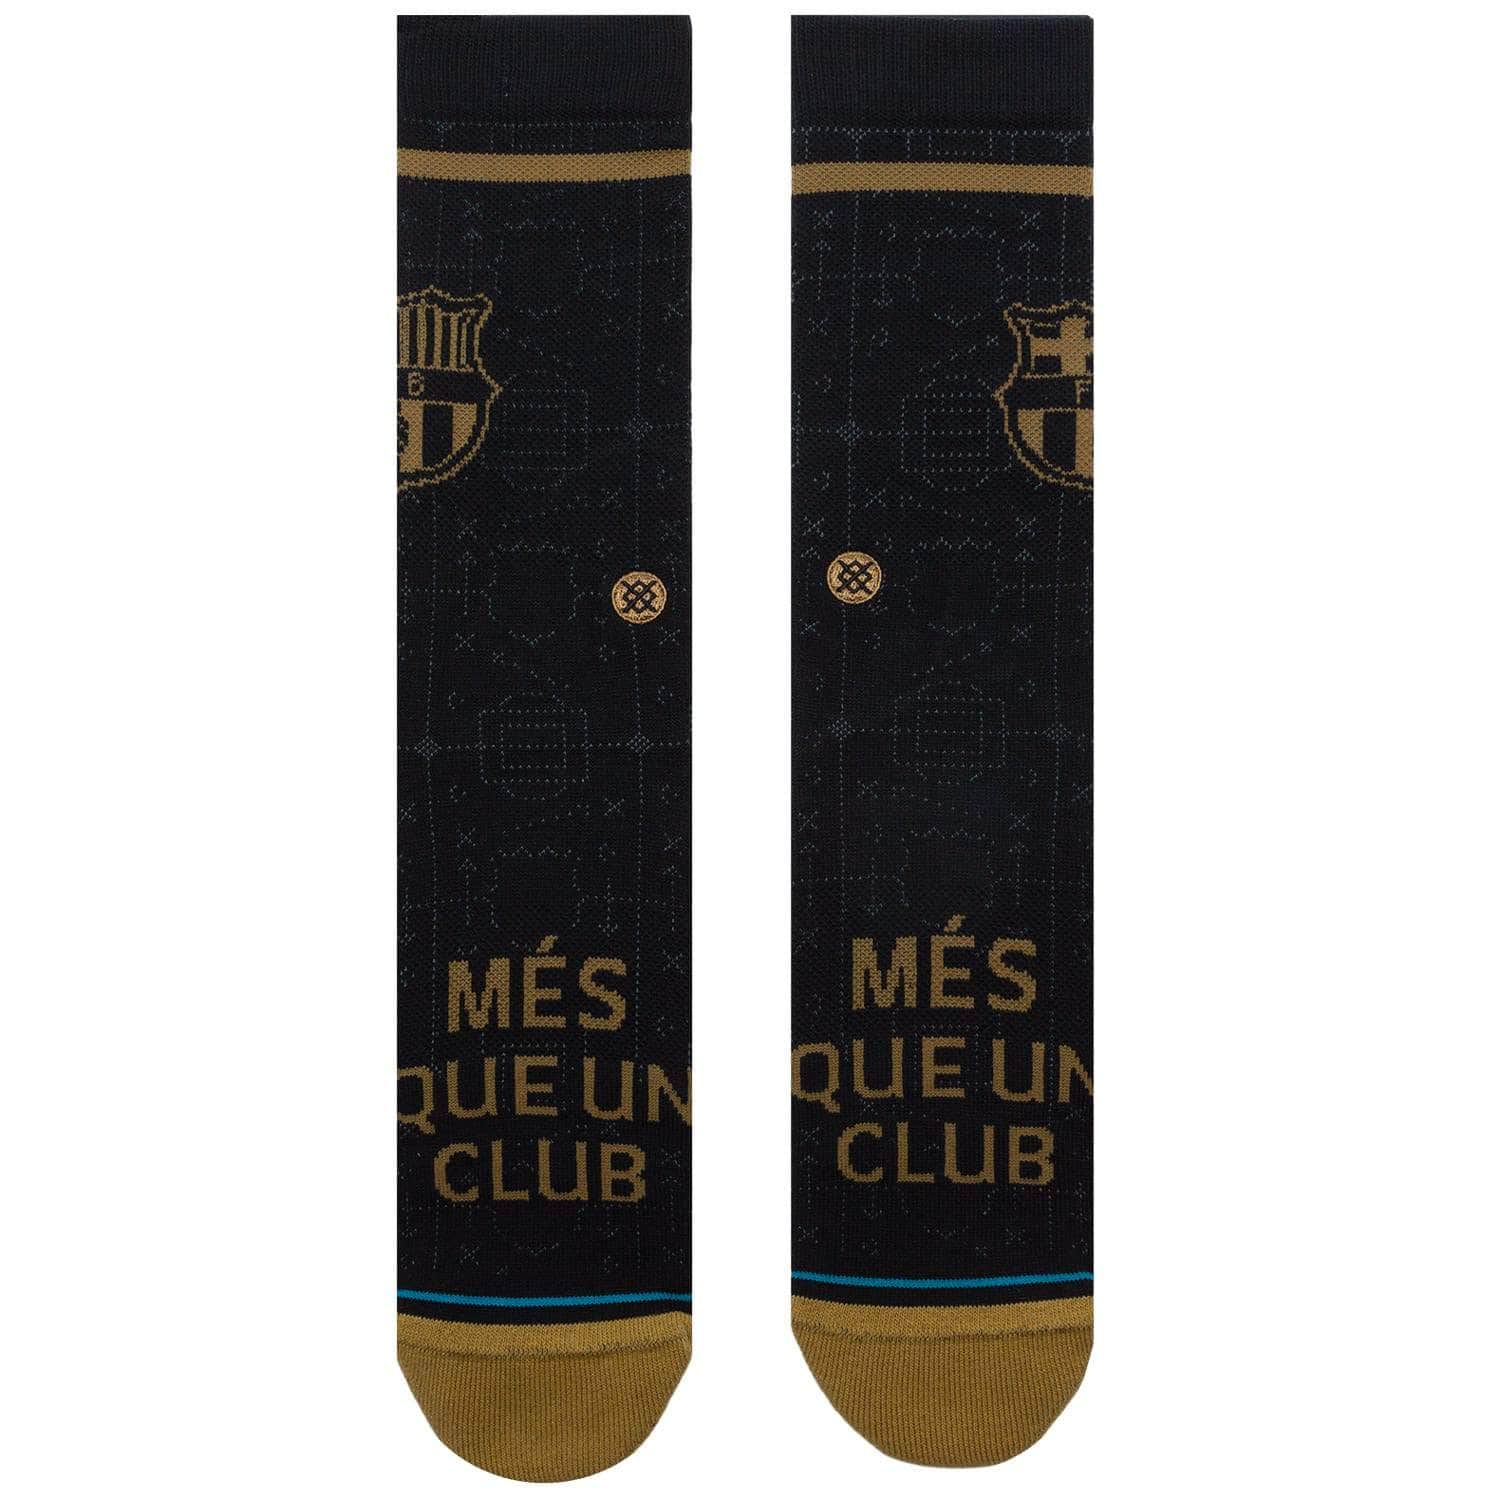 Nine Club x Stance Socks